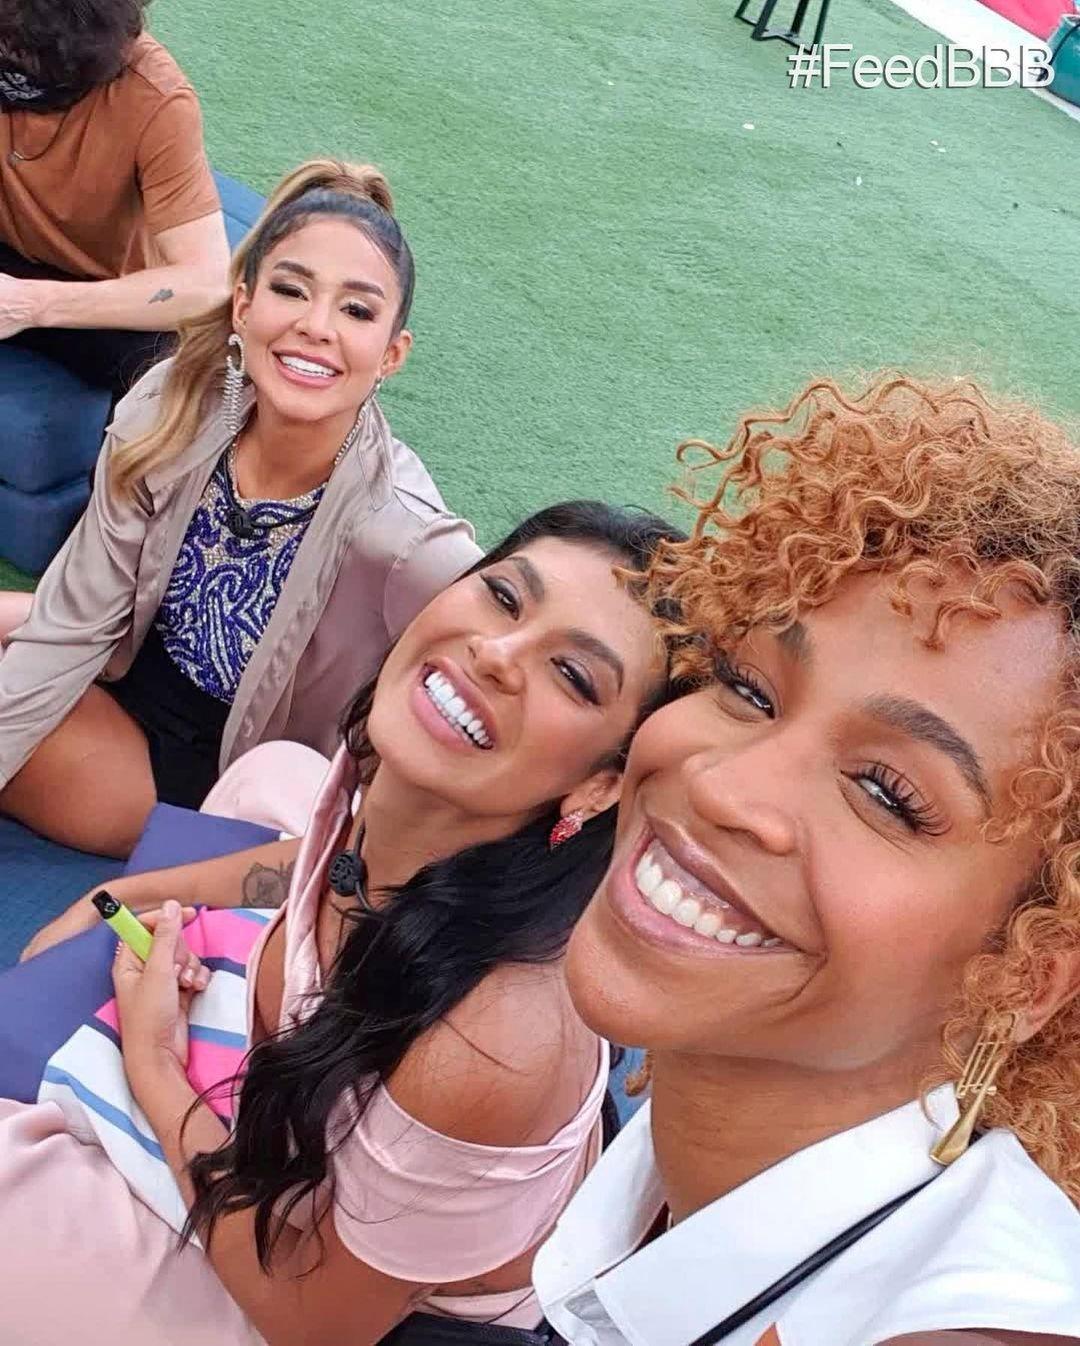 Kerline, Pocah, and Karol Conká make a selfie in "BBB 101 Day" - clone / Instagram